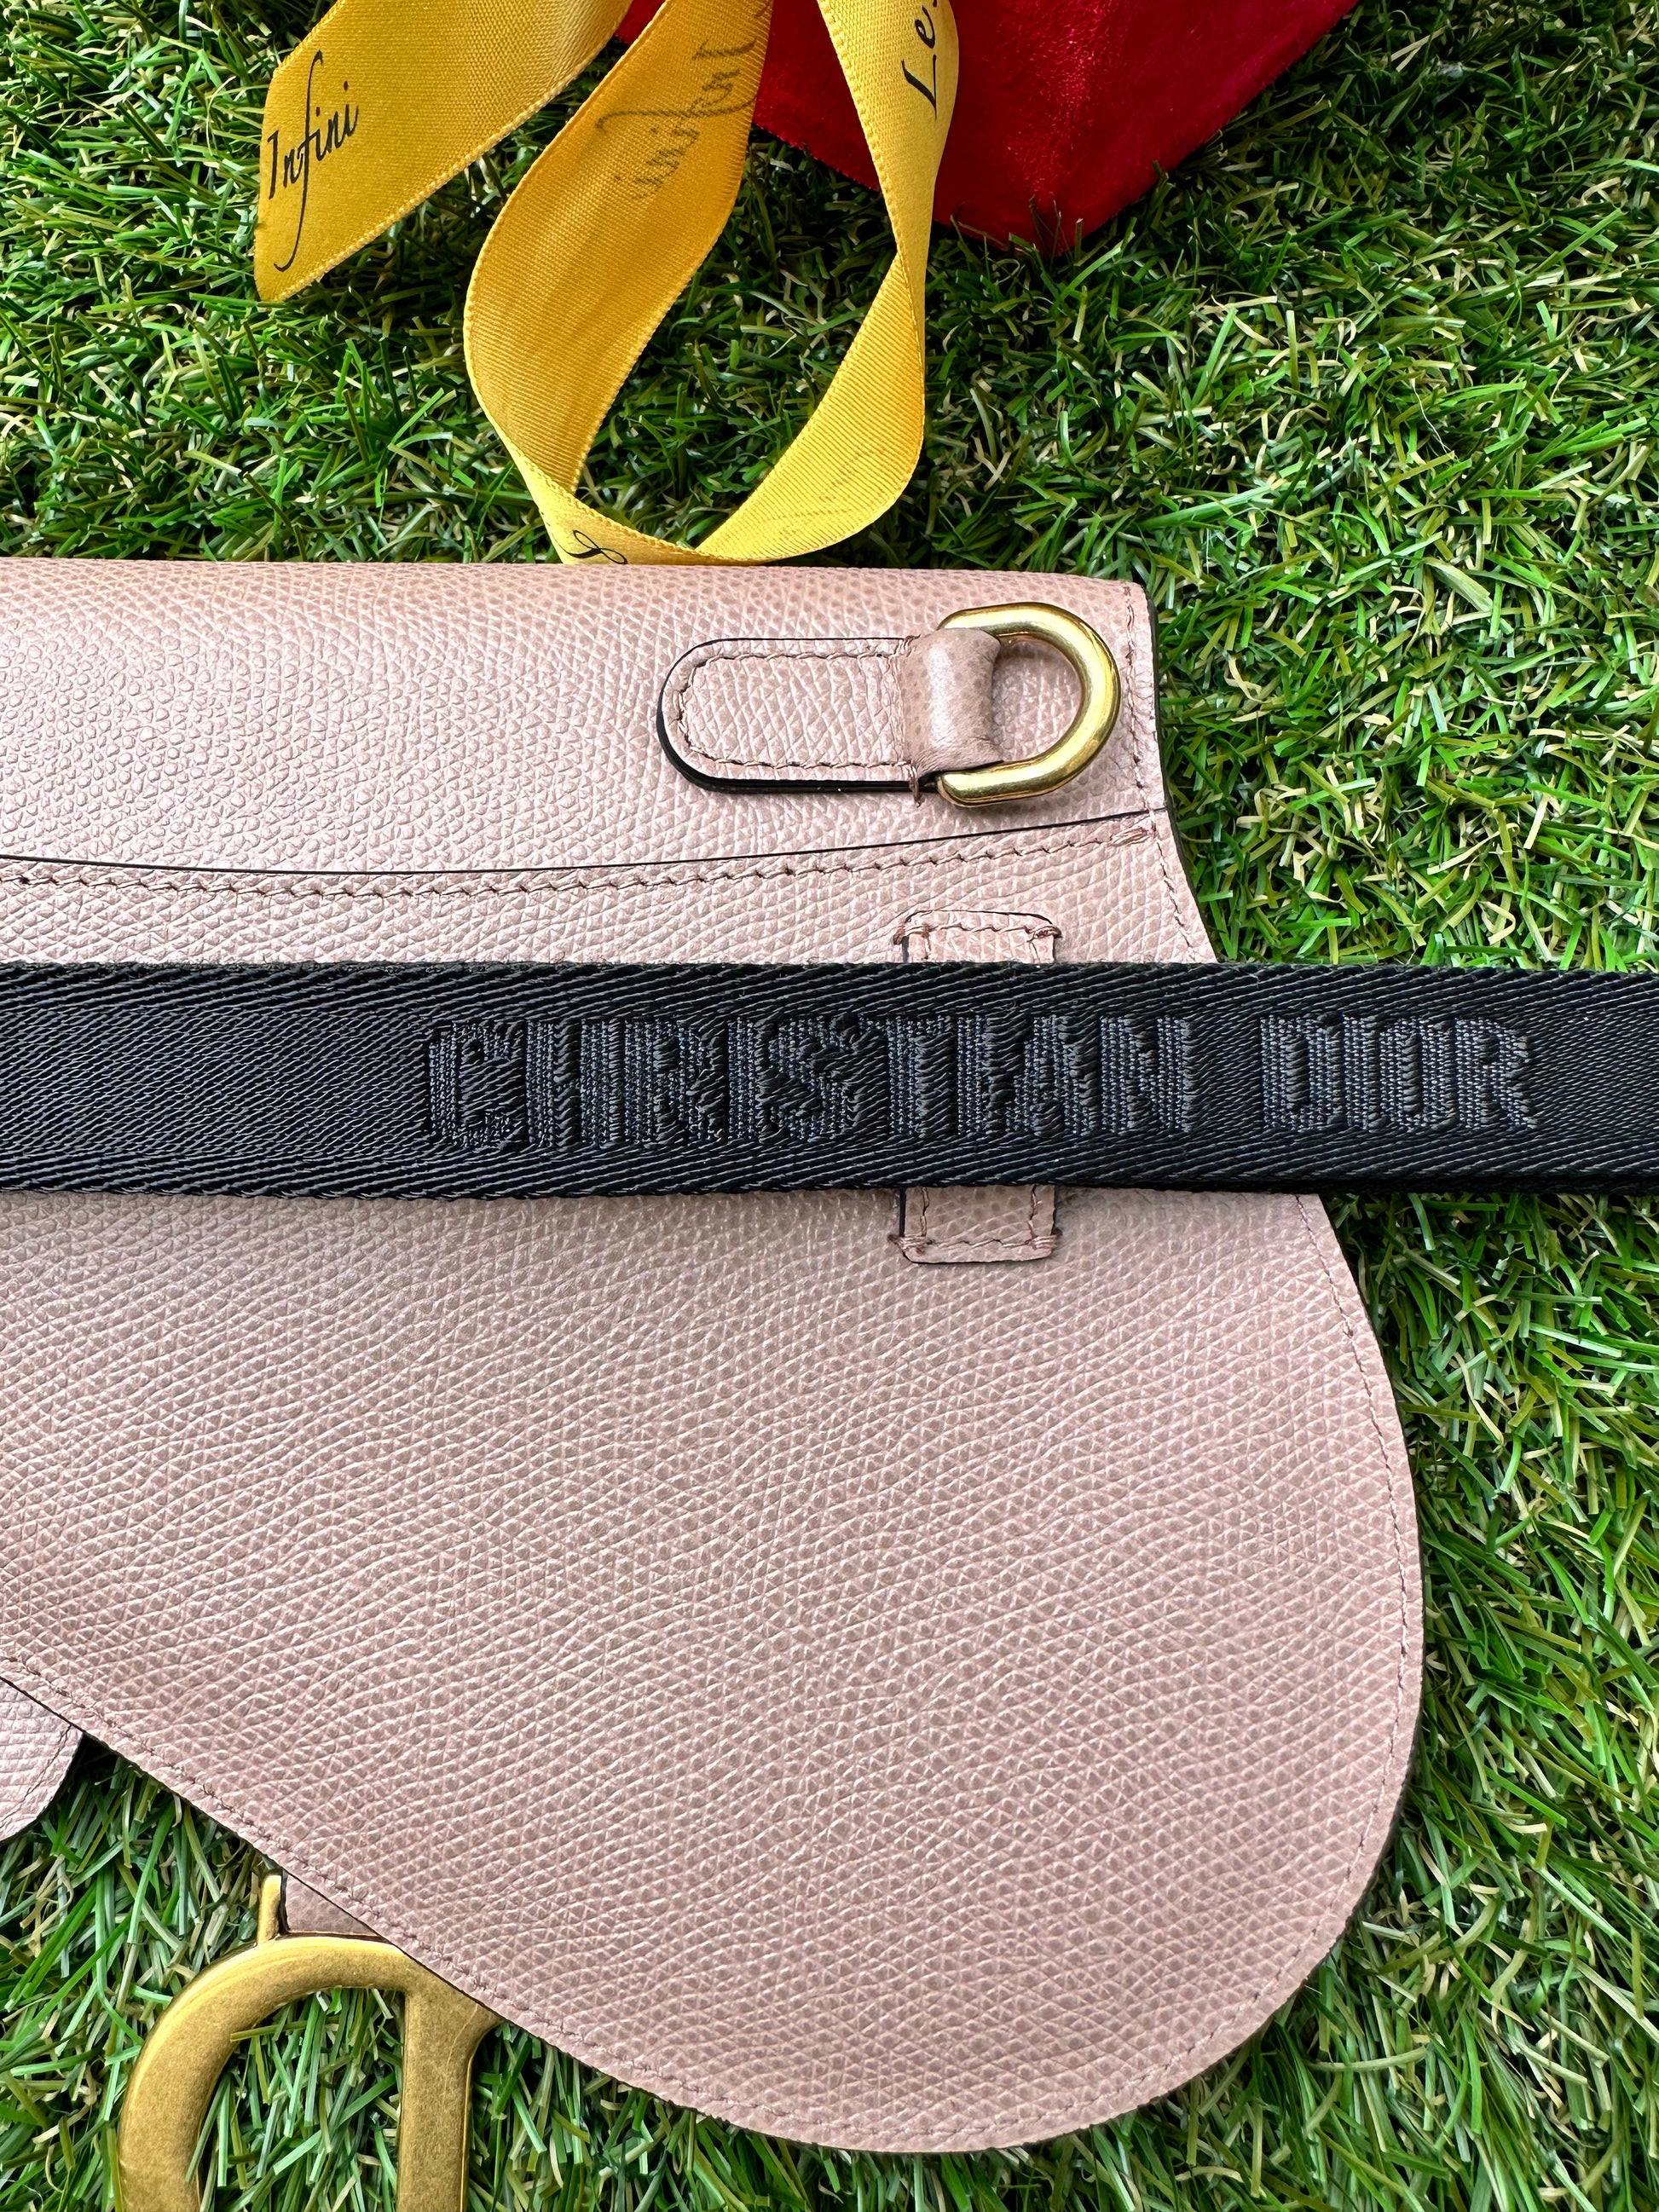 Christian Dior SADDLE SADDLE BELT POUCH